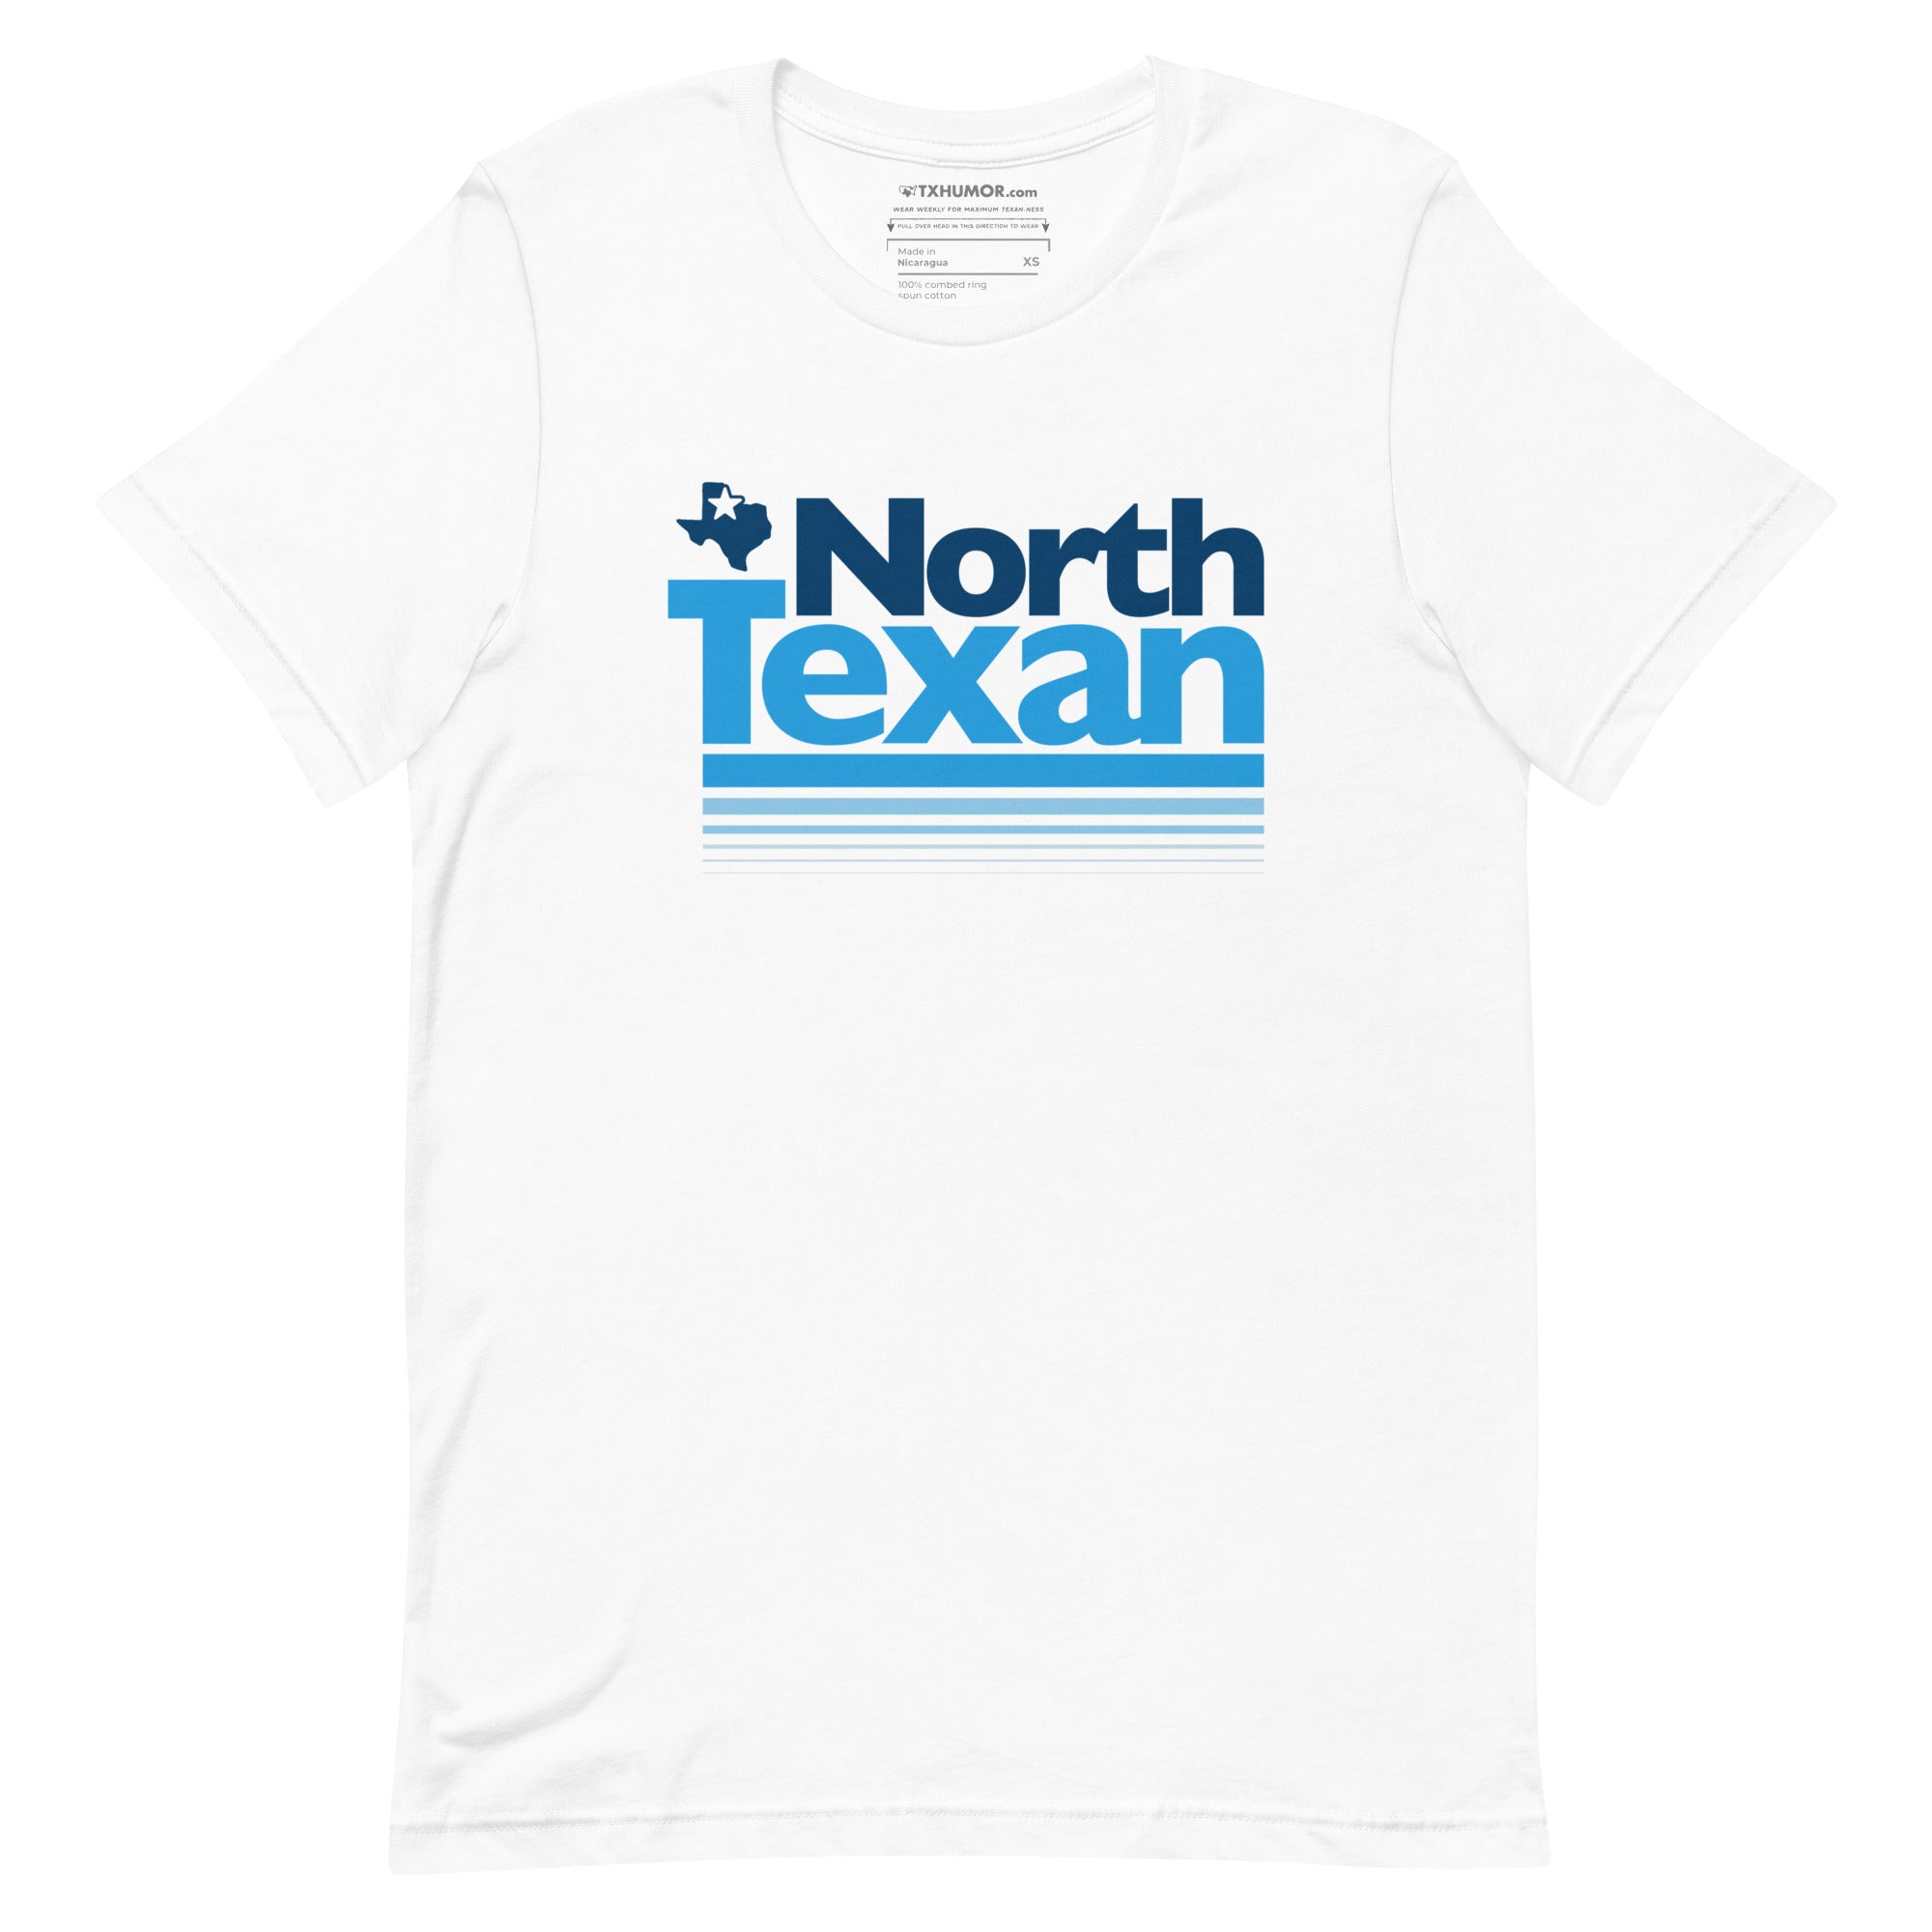 North Texan T-shirt